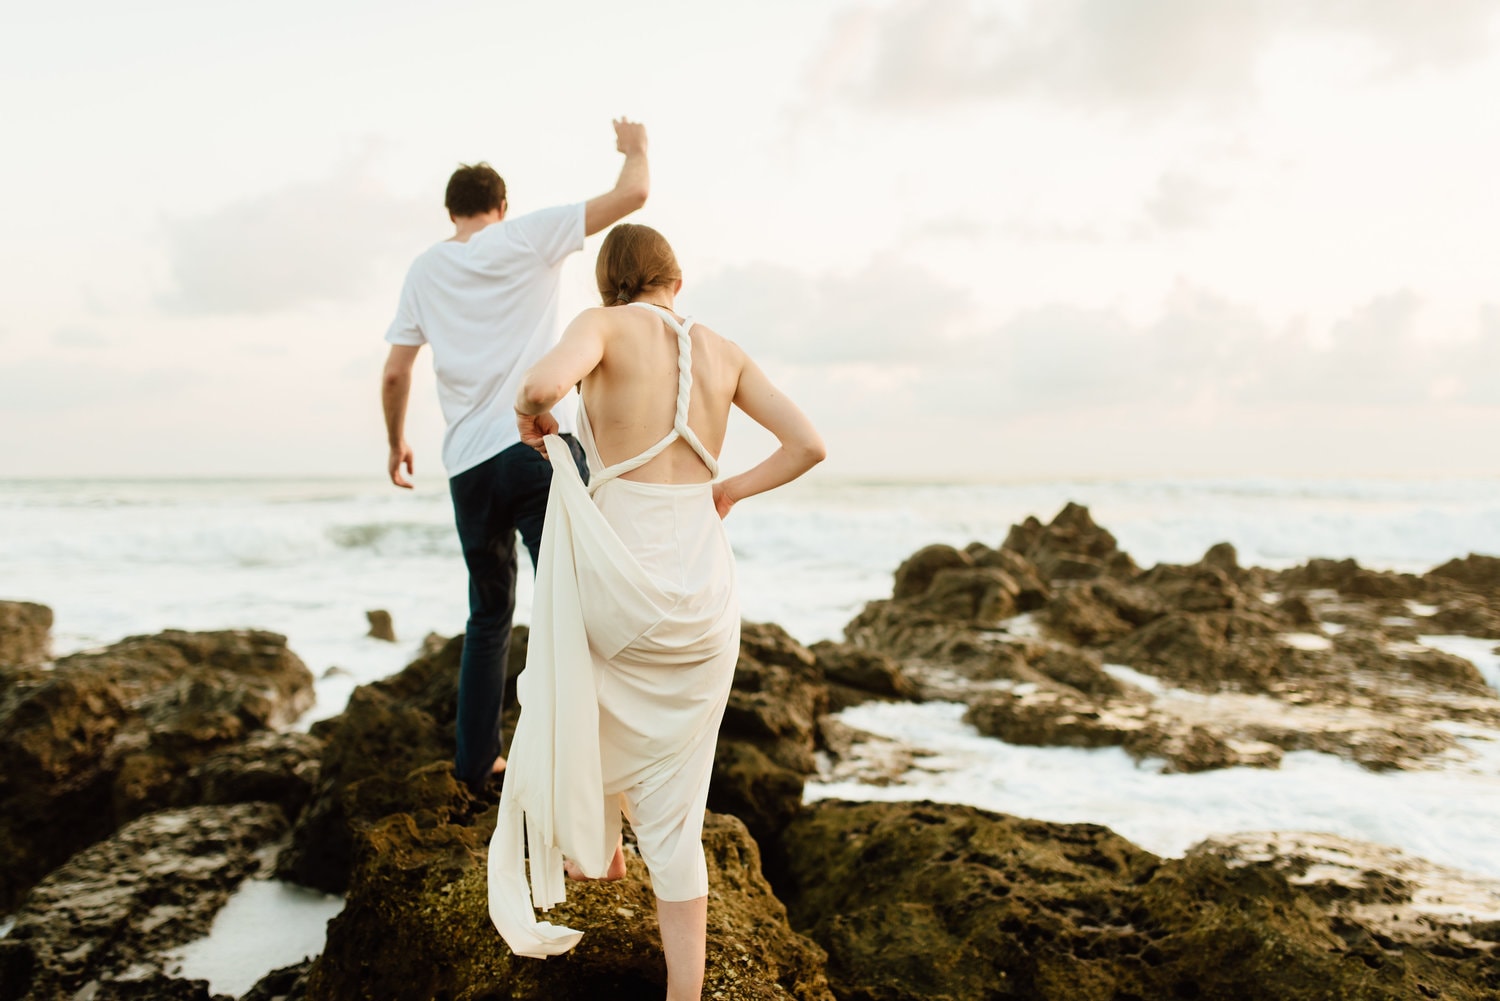 Bride and groom walk across rocks together along the shore in Santa Teresa, Costa Rica.